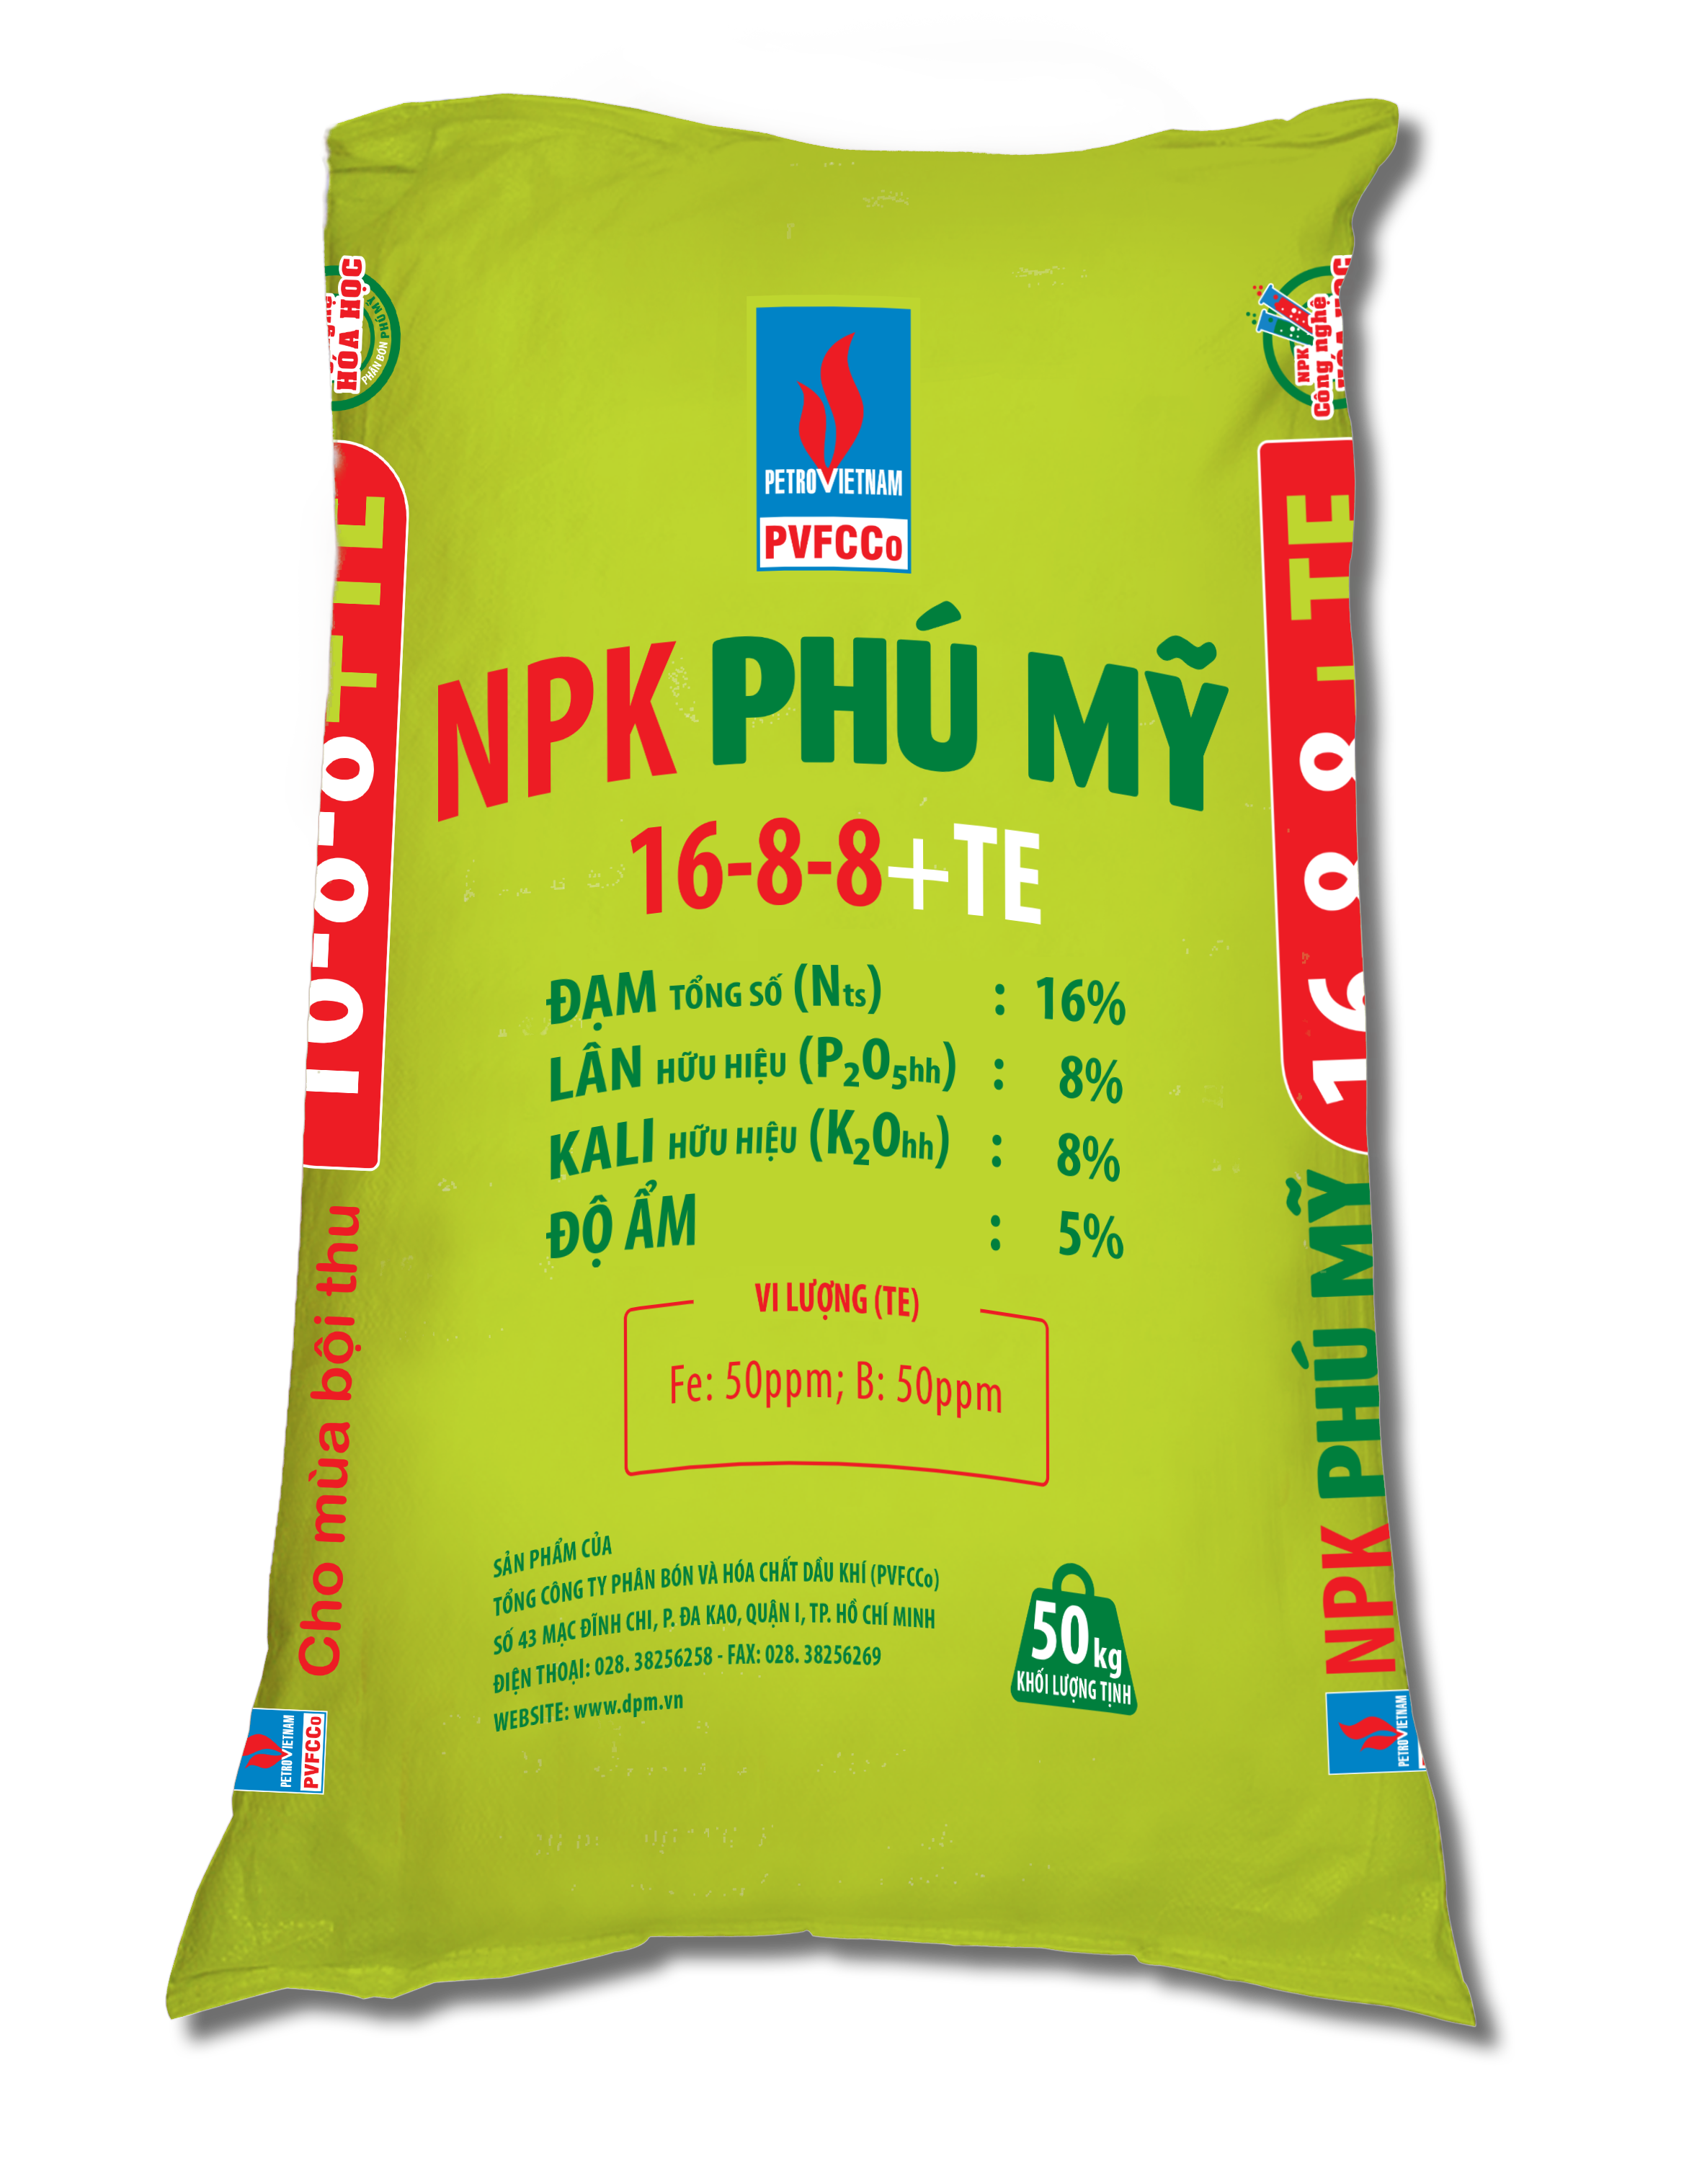 NPK Phu My 16-8-8+TE (Dry Season)